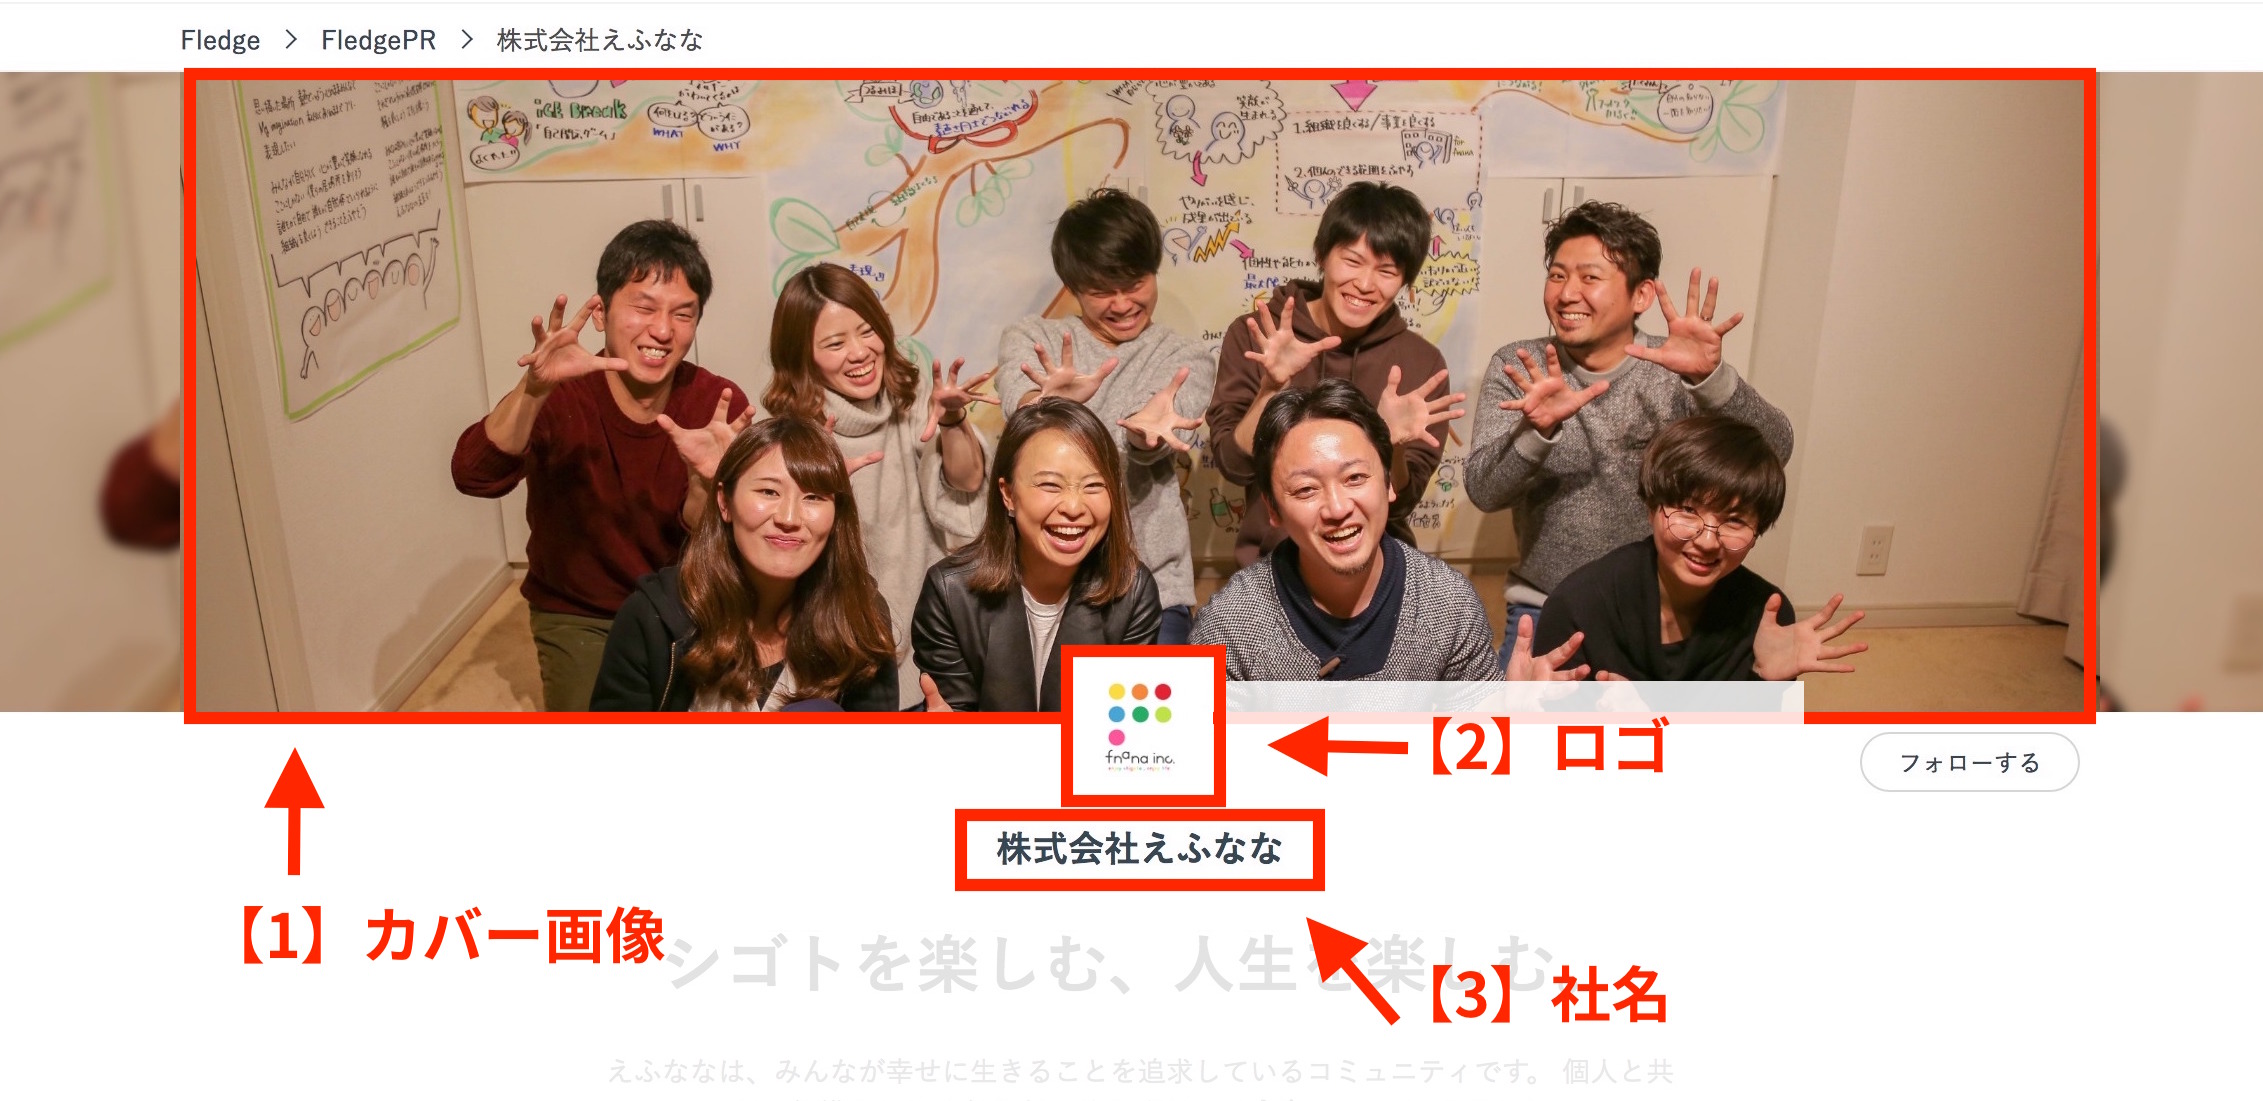 FireShot Capture 159 - 株式会社えふなな I 働き方メディア Fledge(フレッジ) - https___v2.fledge.jp_company_fnana のコピー.jpg